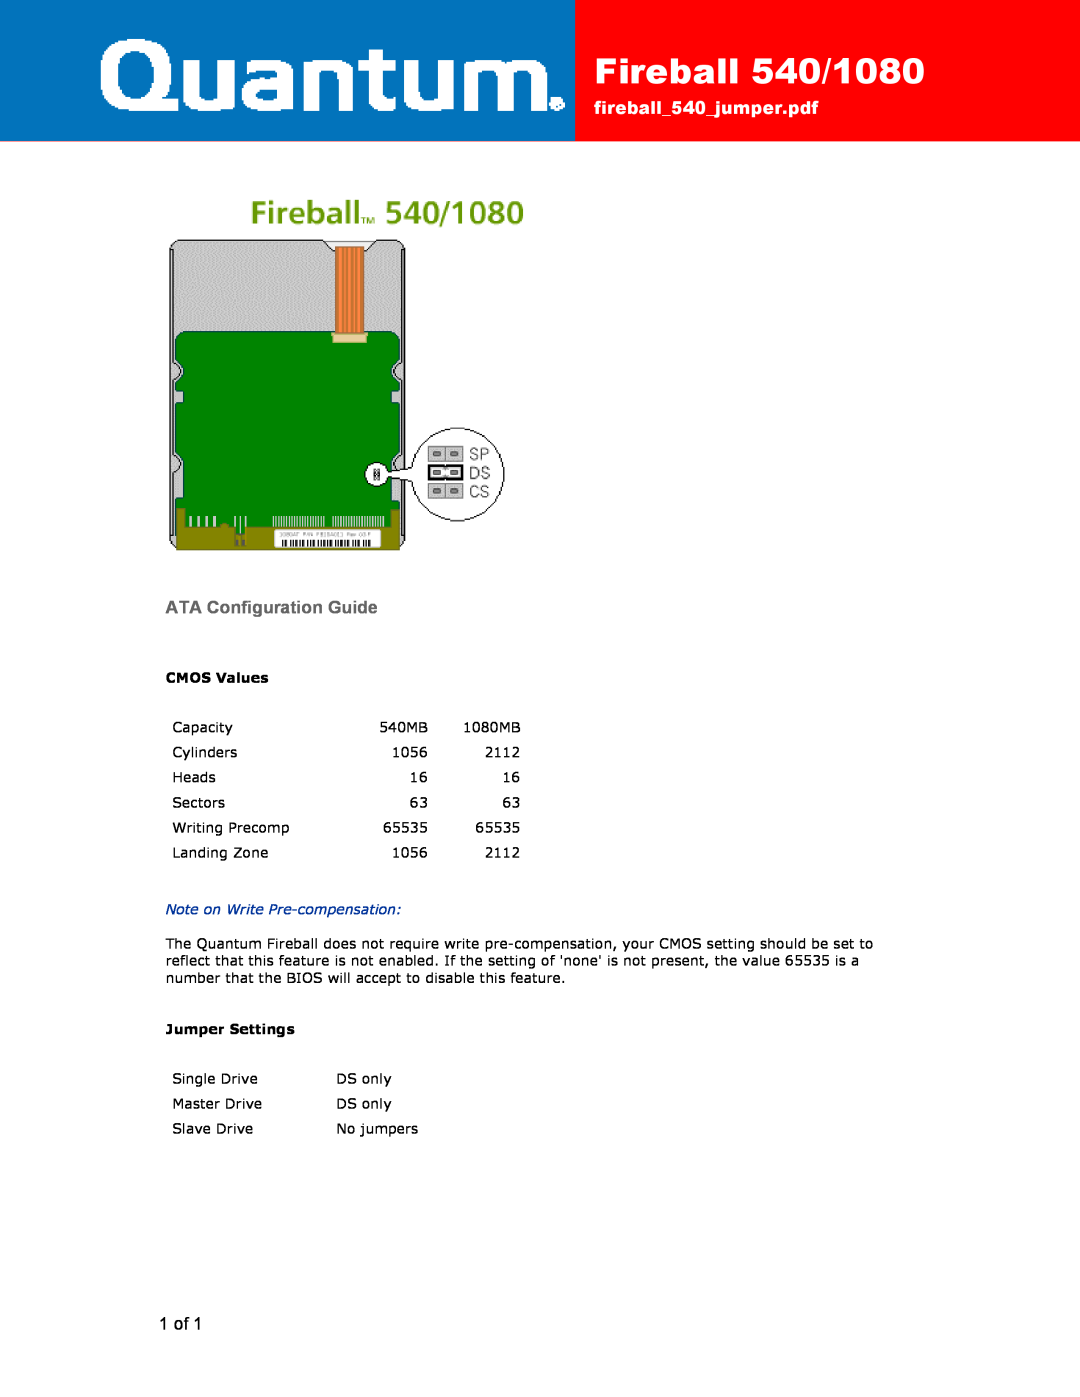 Quantum manual Fireball 540/1080, fireball540jumper.pdf, ATA Configuration Guide, 1 of, CMOS Values, Jumper Settings 